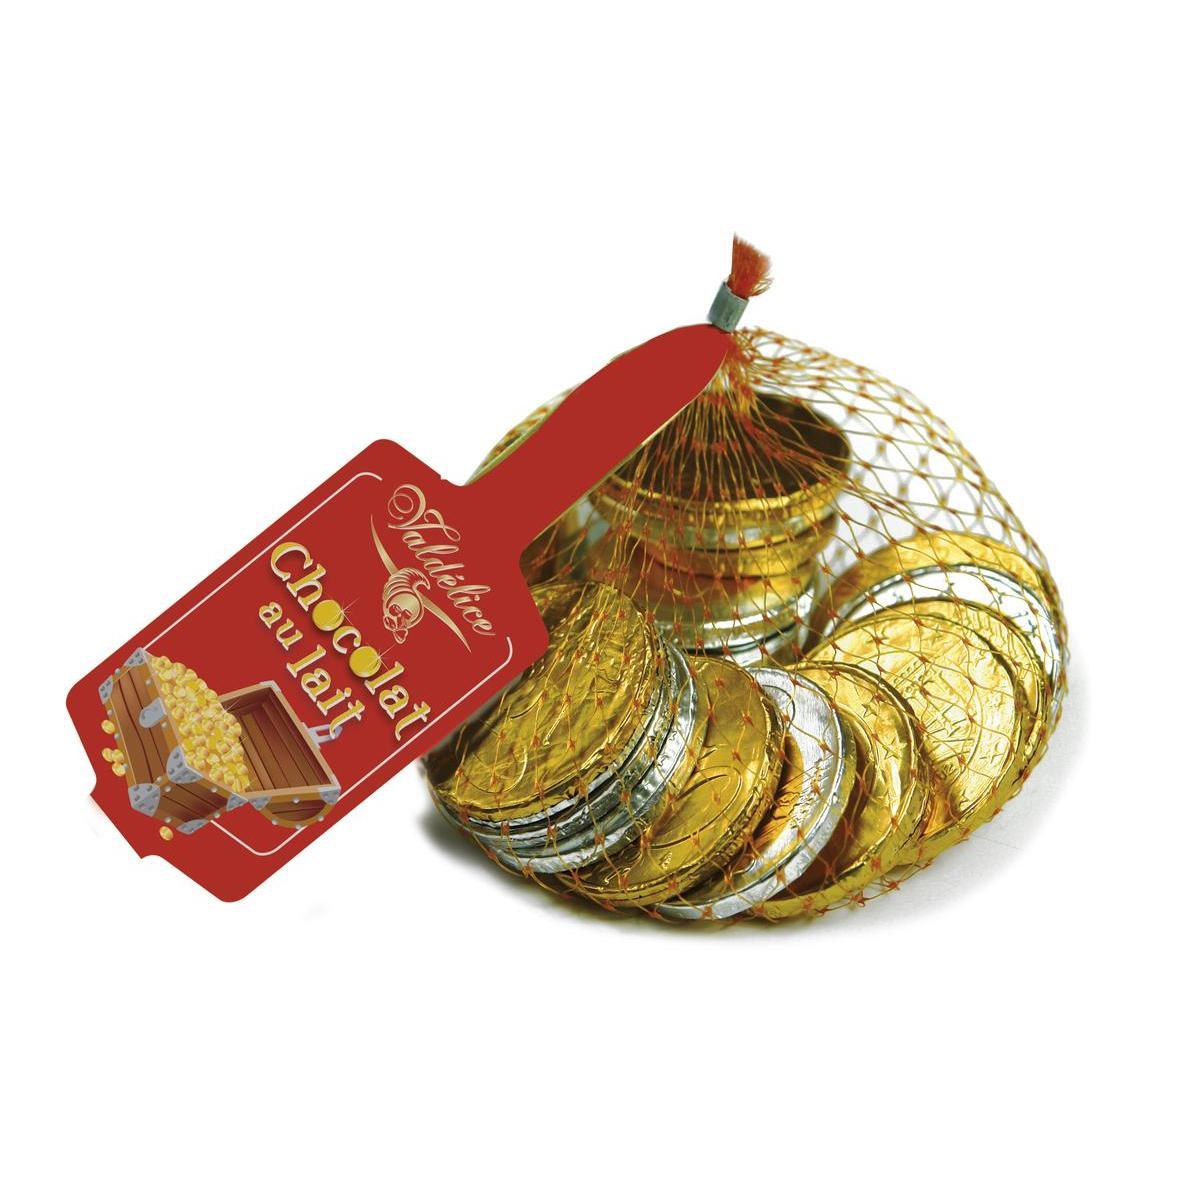 Filet pièces d'or en chocolat - 100 g - VALDÉLICE